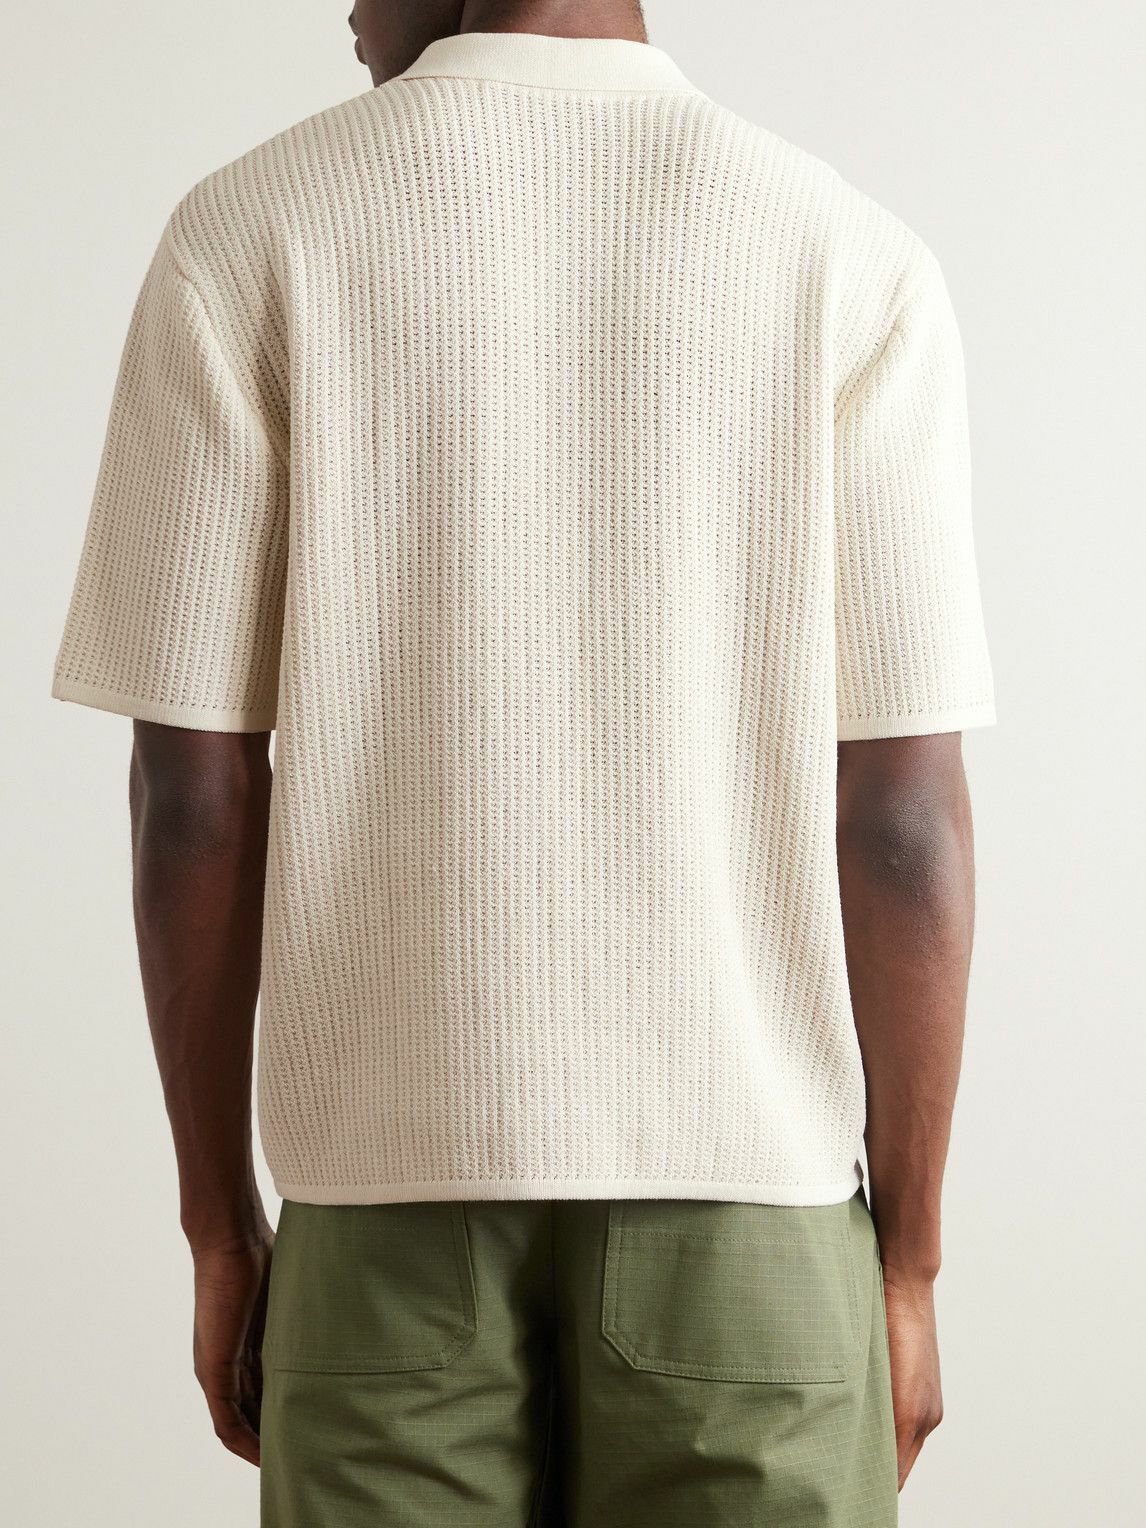 RAG & BONE Nolan Crochet-Knit Polo Shirt for Men